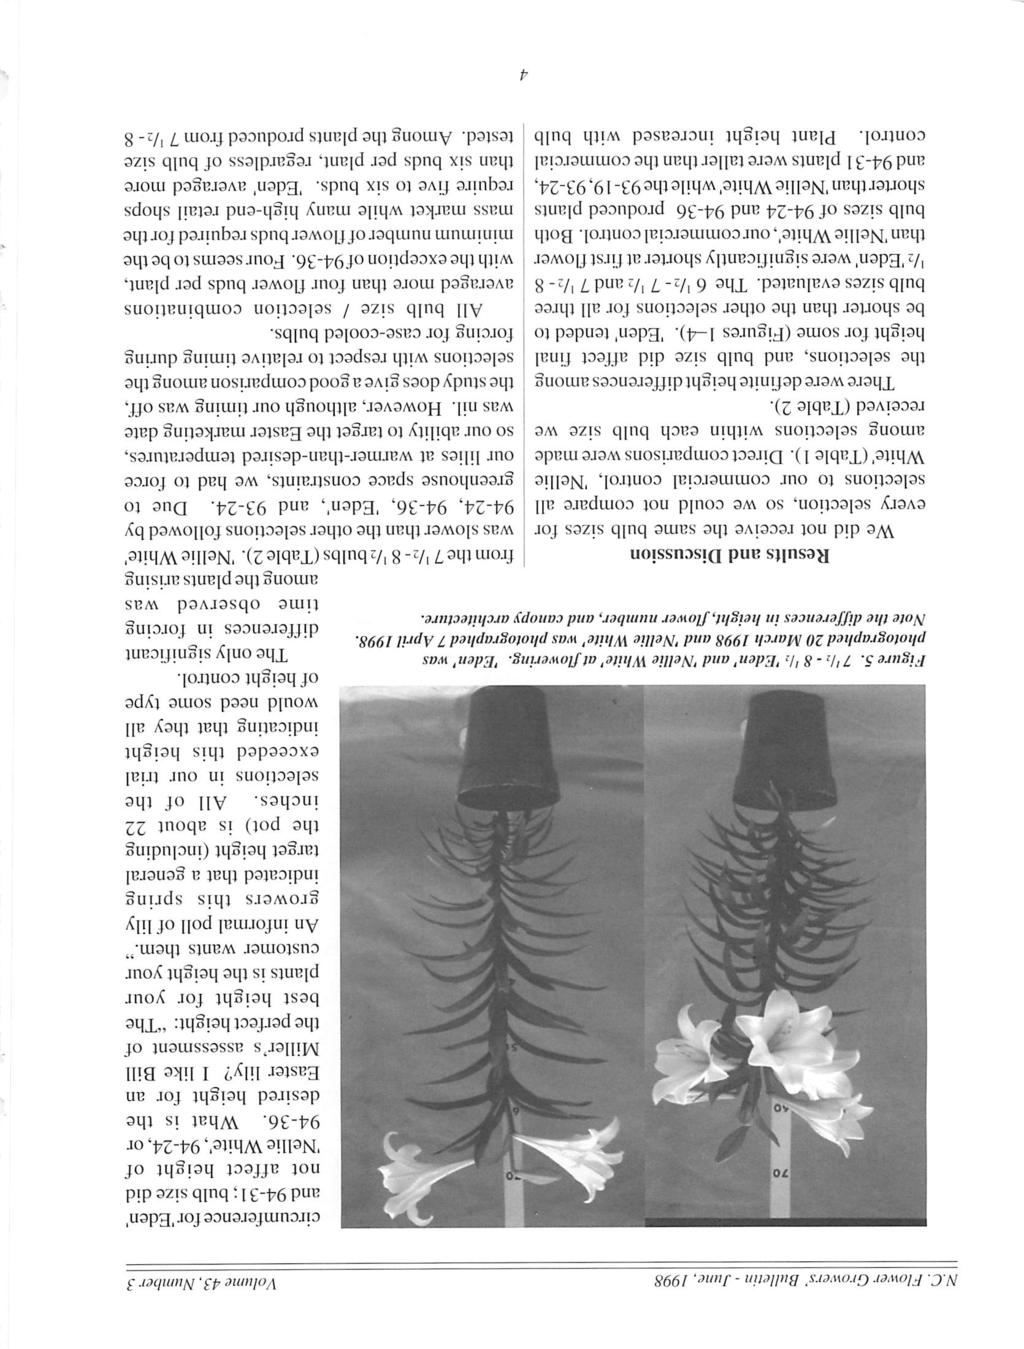 N.C. Flower Growers' Bulletin - June, 1998 Volume 43, Number 3 Figure 5. 7'/: - 8 'h 'Eden' and 'Nellie White' atflowering.